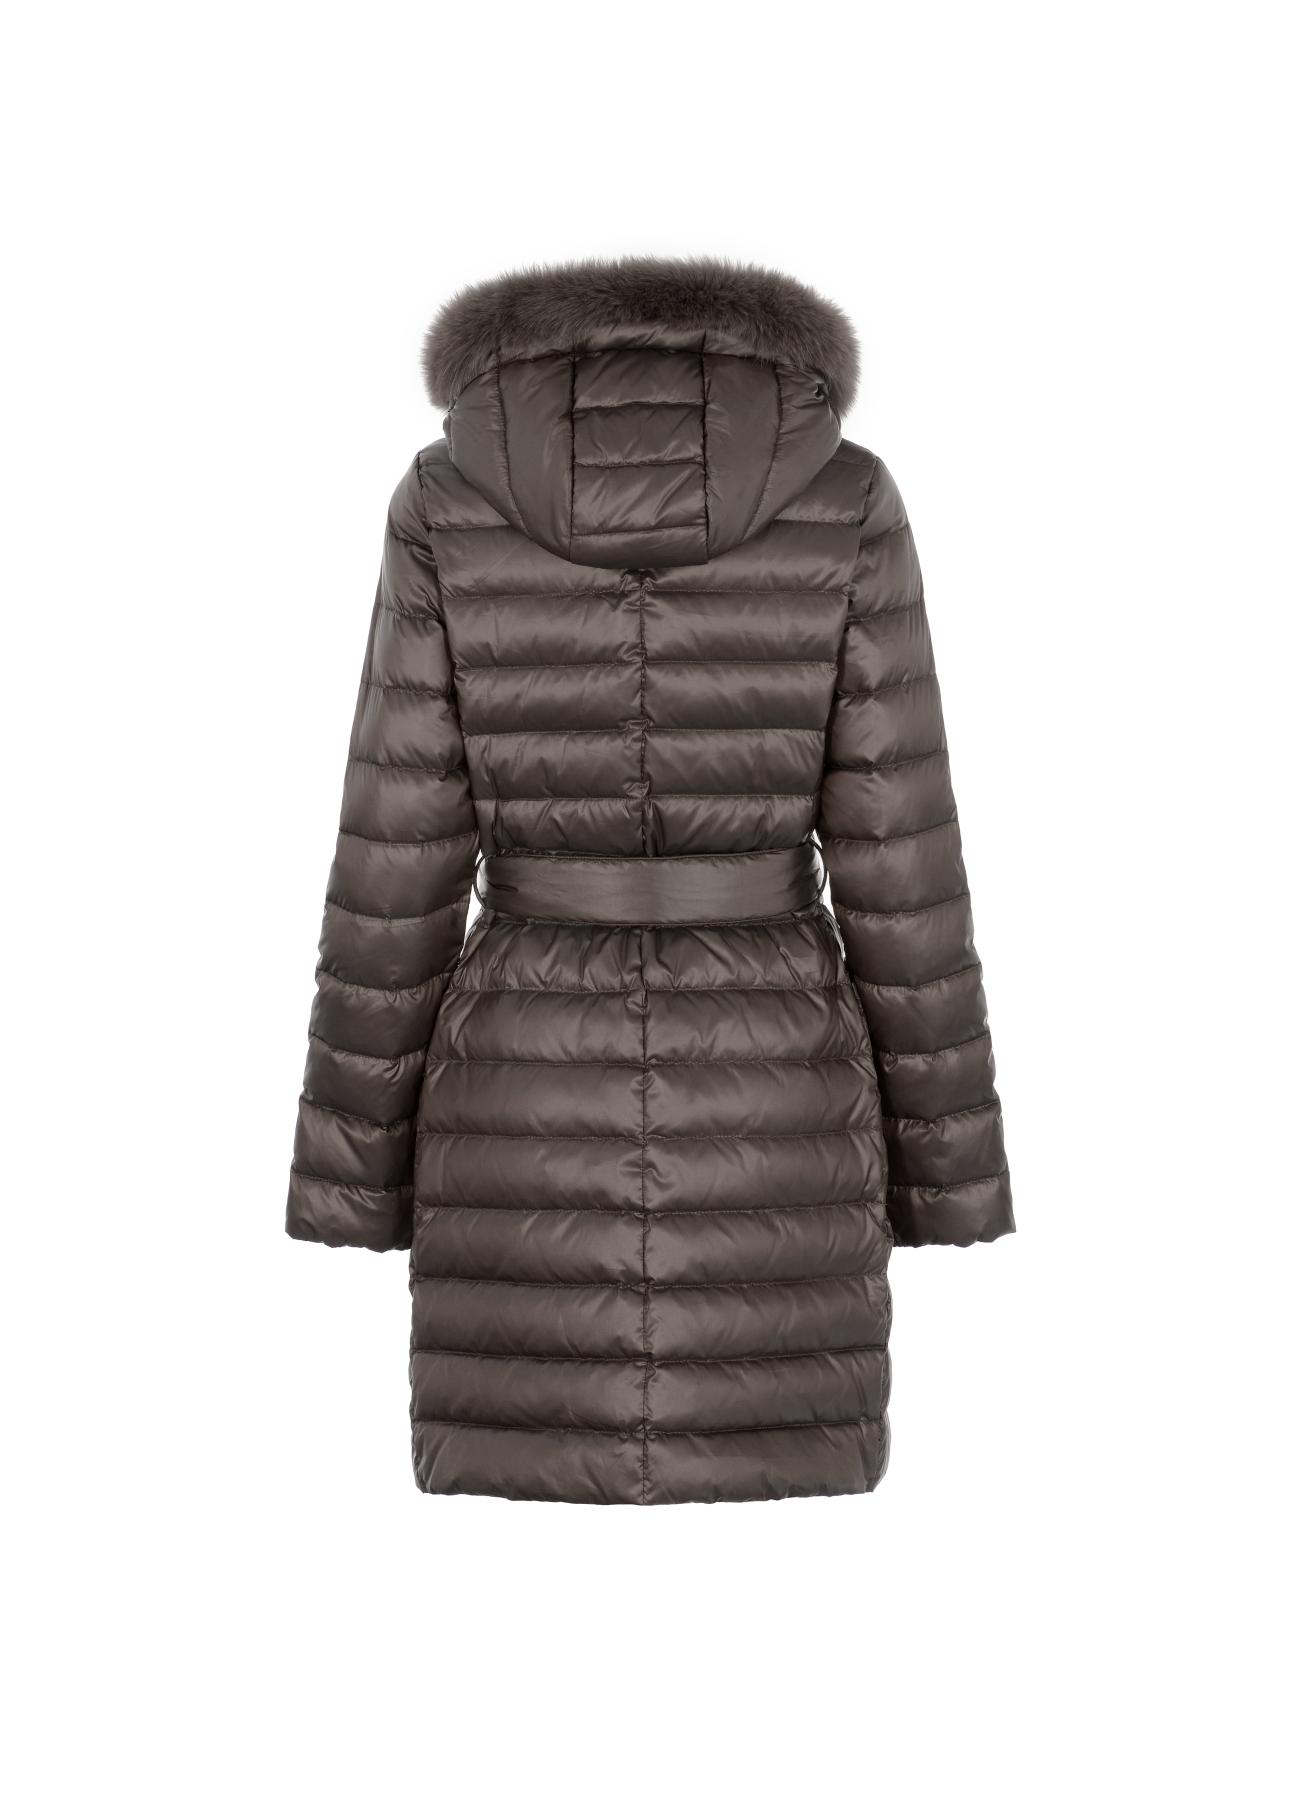 Pikowana kurtka zimowa damska KURDT-0340-81(Z21)